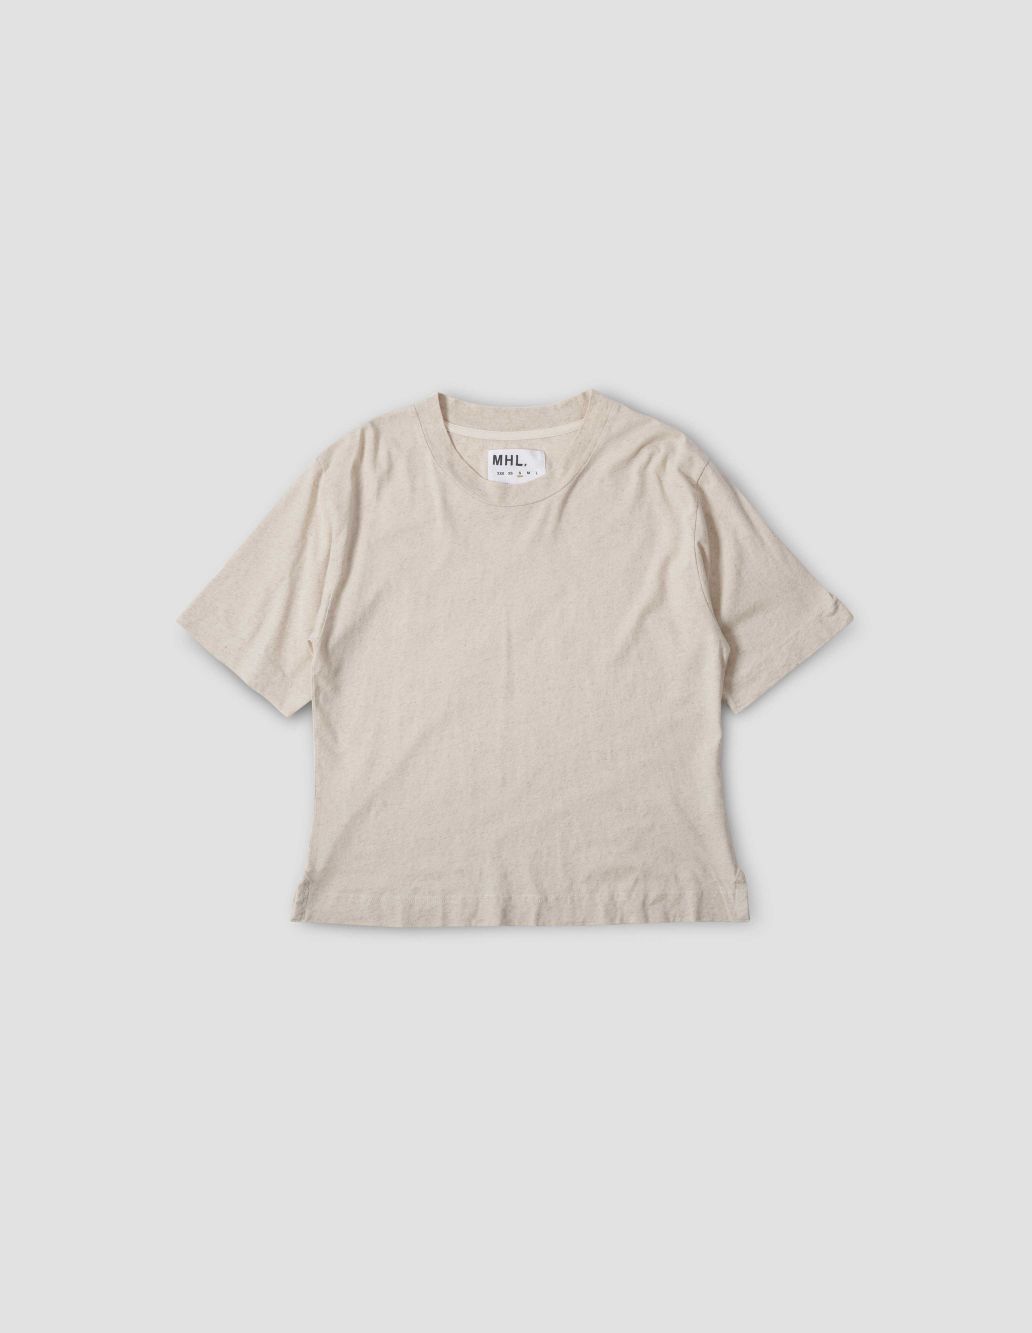 MARGARET HOWELL - Natural cotton linen T shirt | MHL. by Margaret 